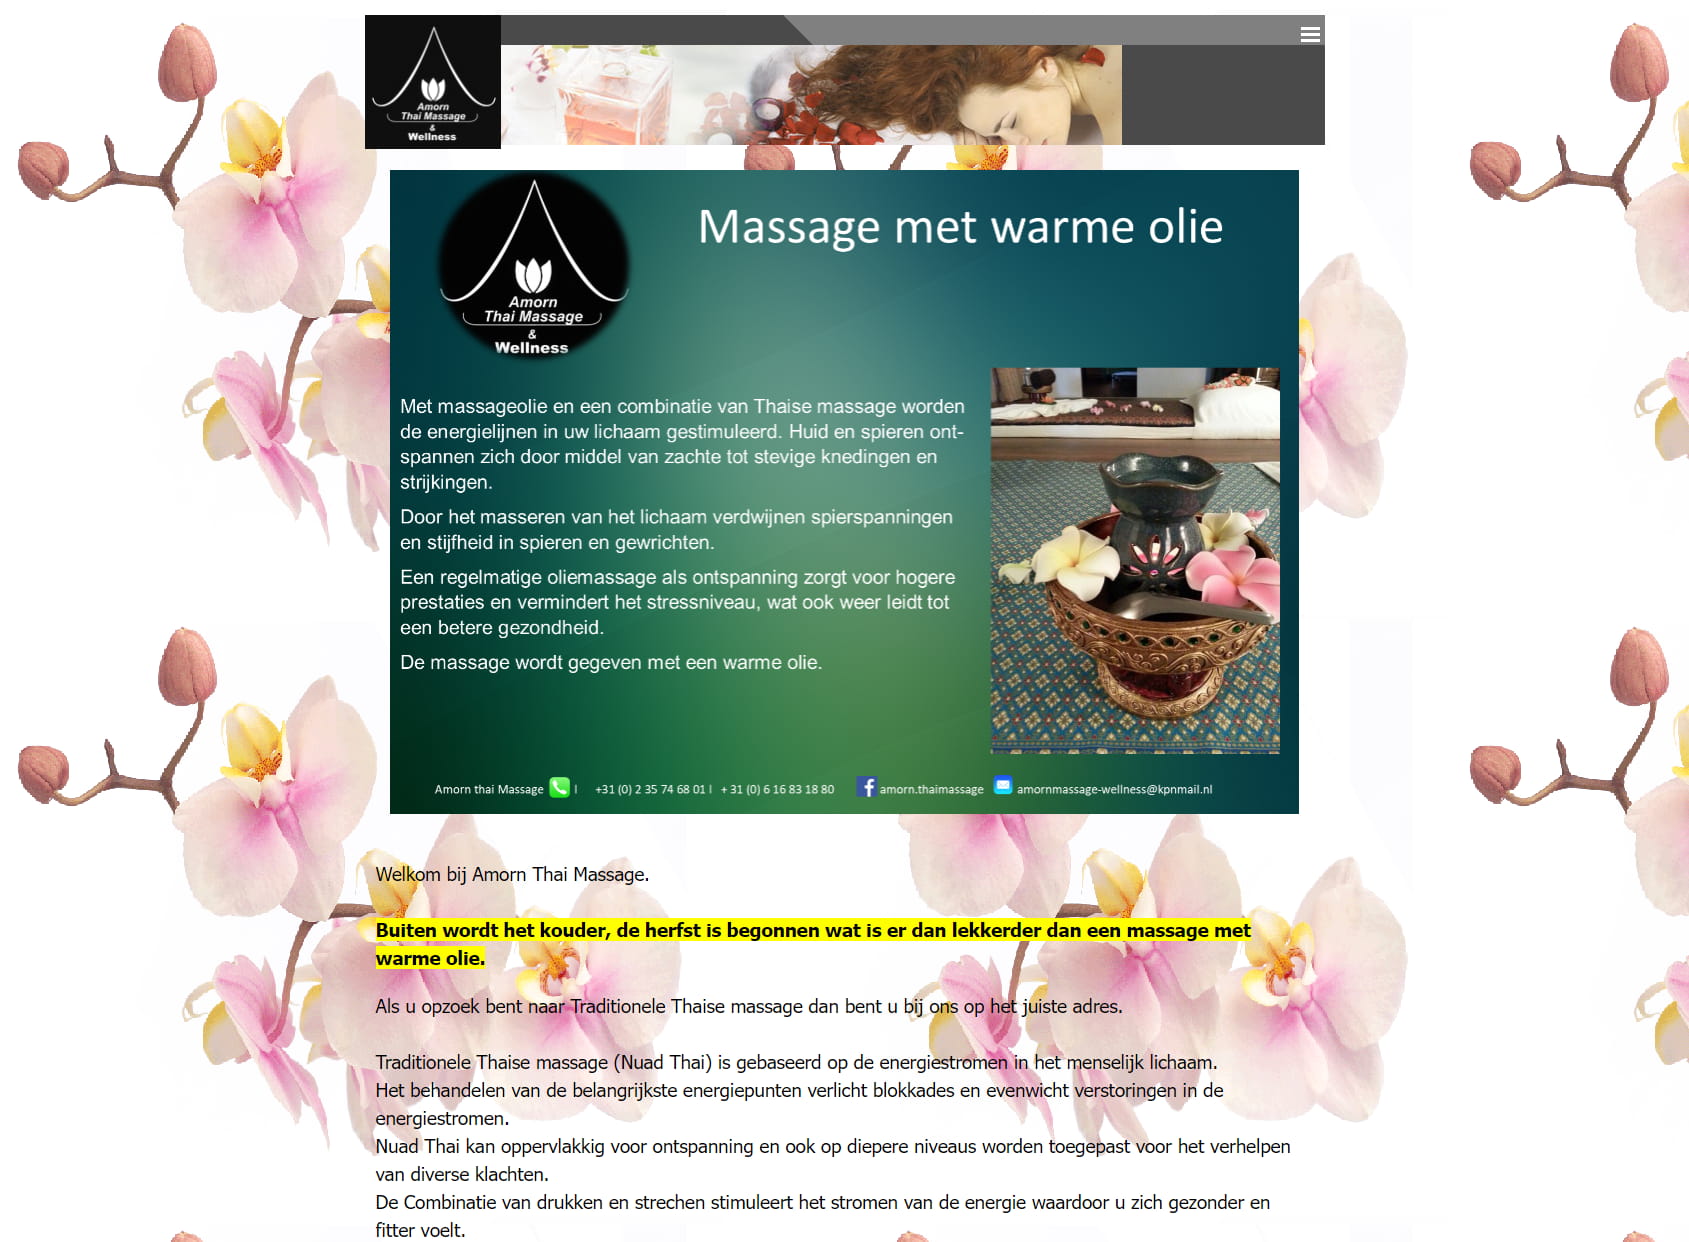 Amorn Thai Massage & Wellness